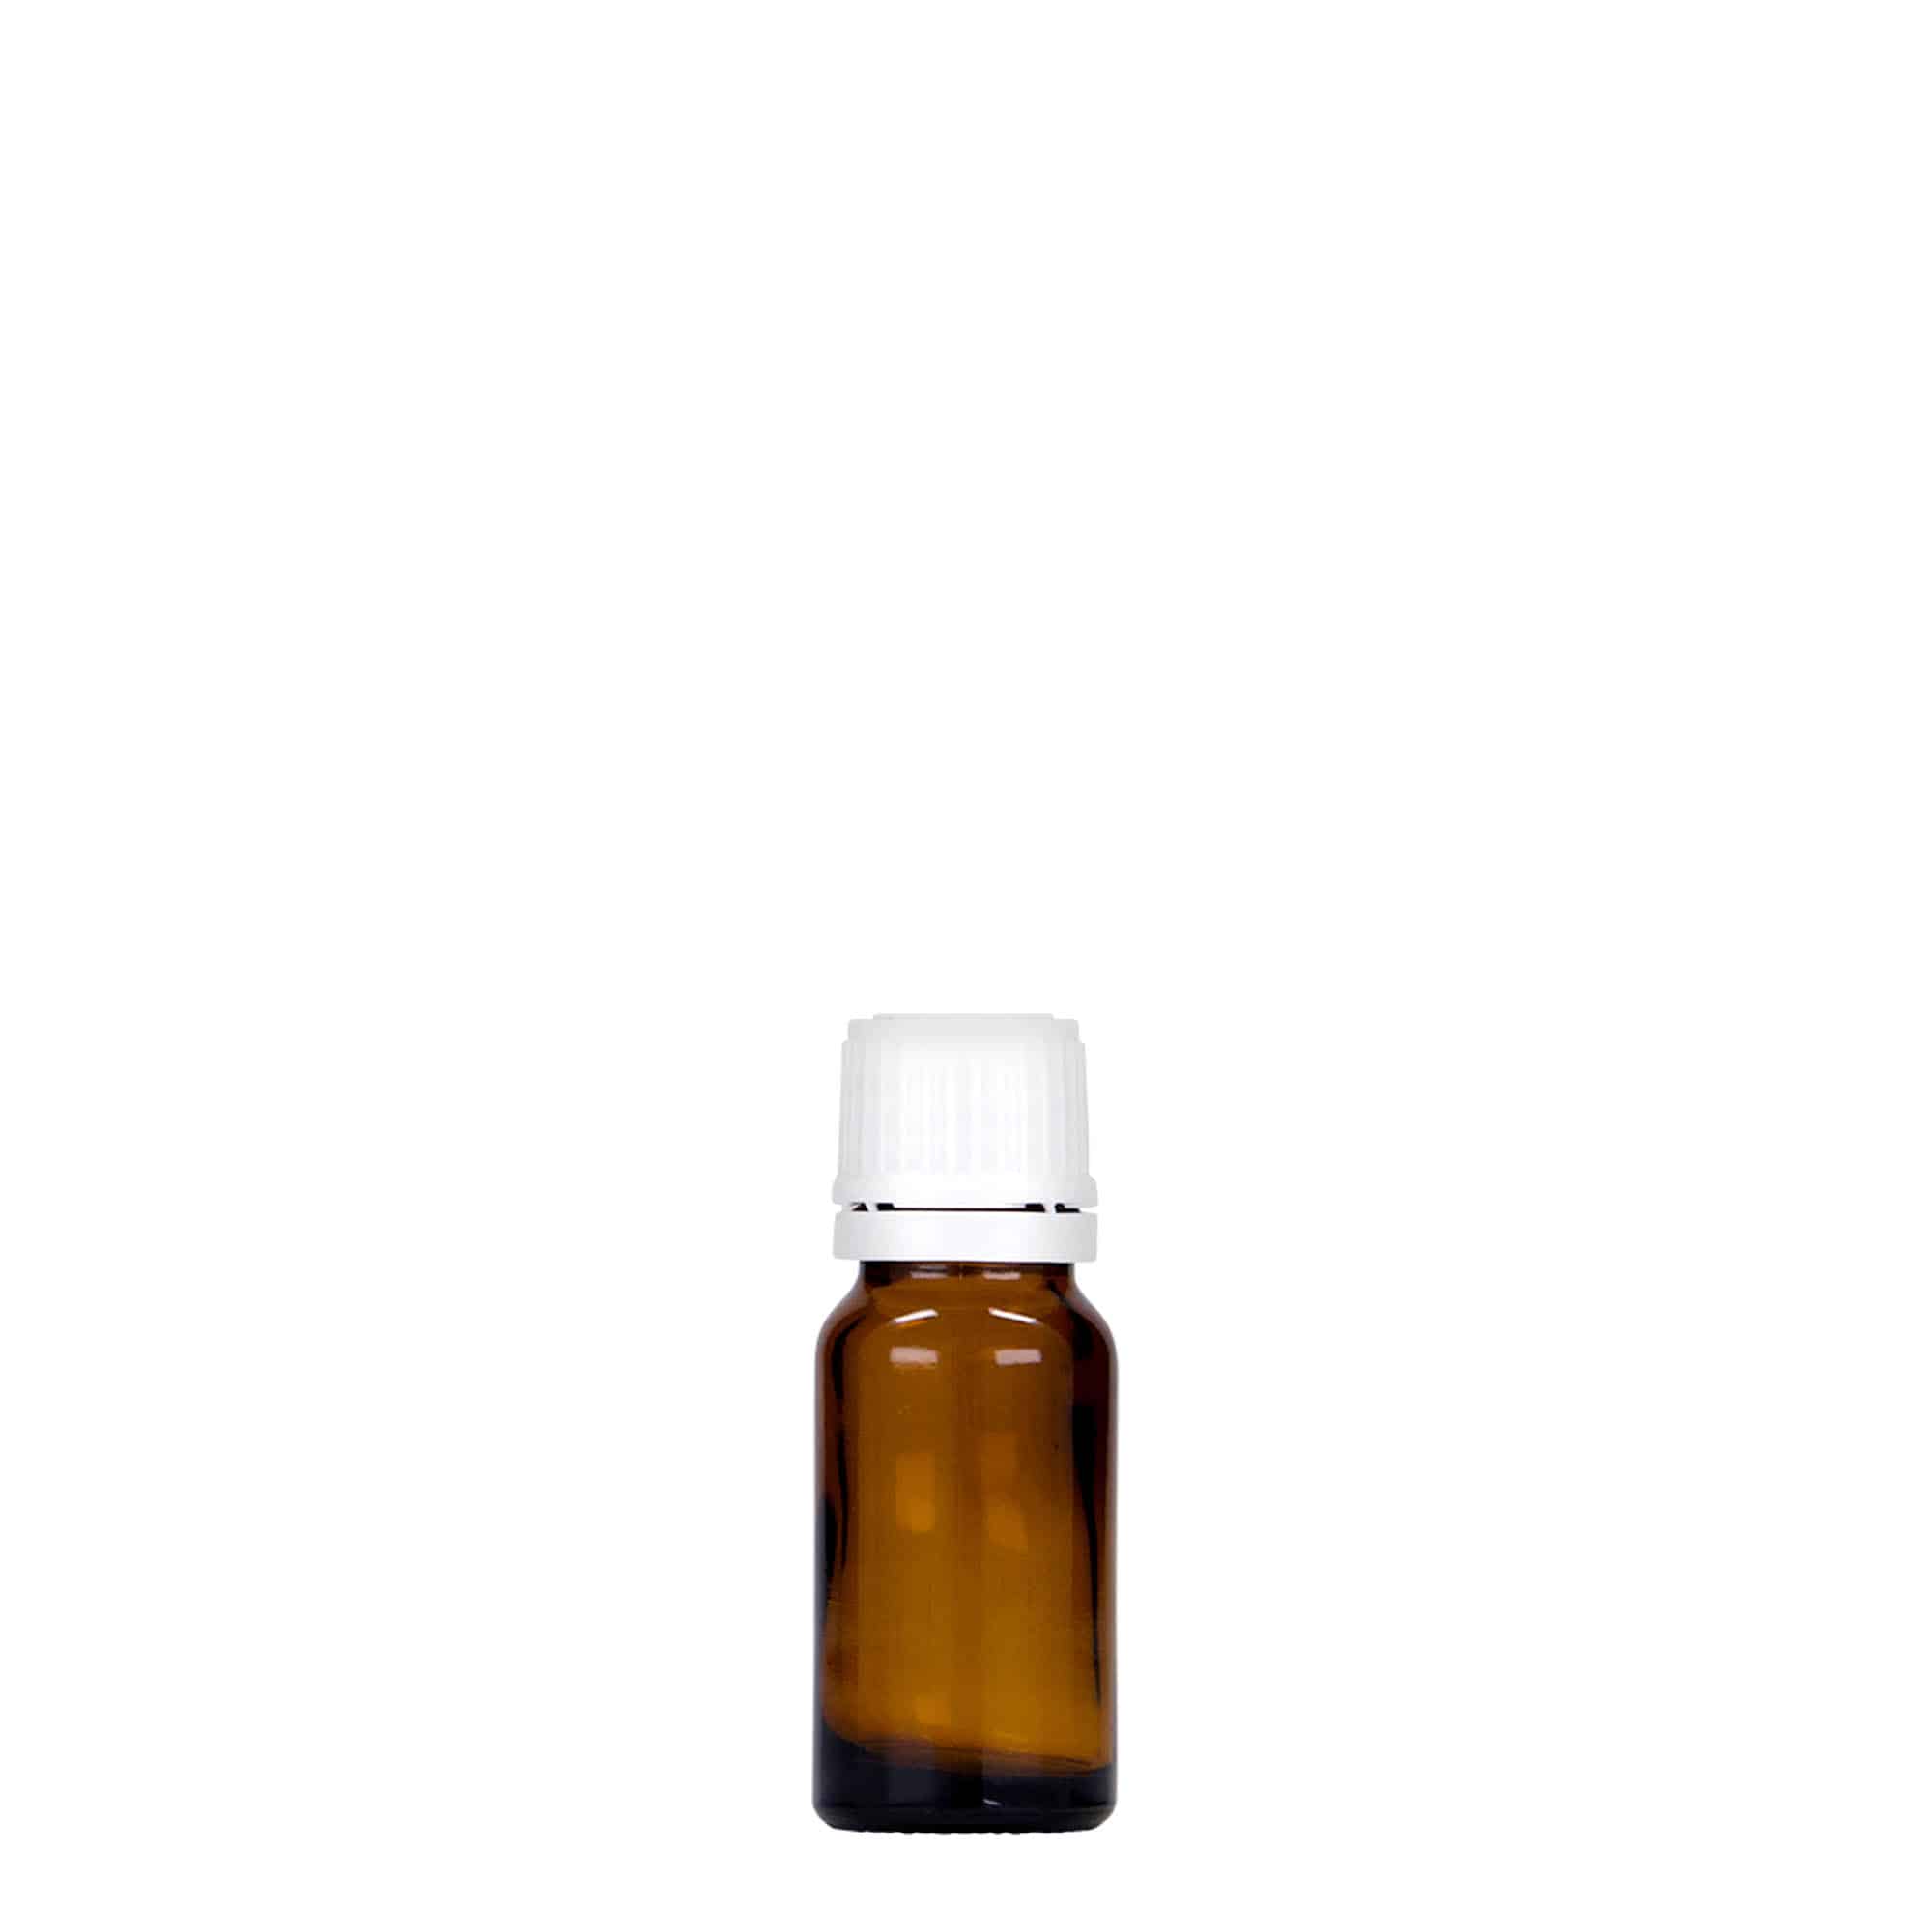 10 ml medicine bottle, glass, brown, closure: DIN 18